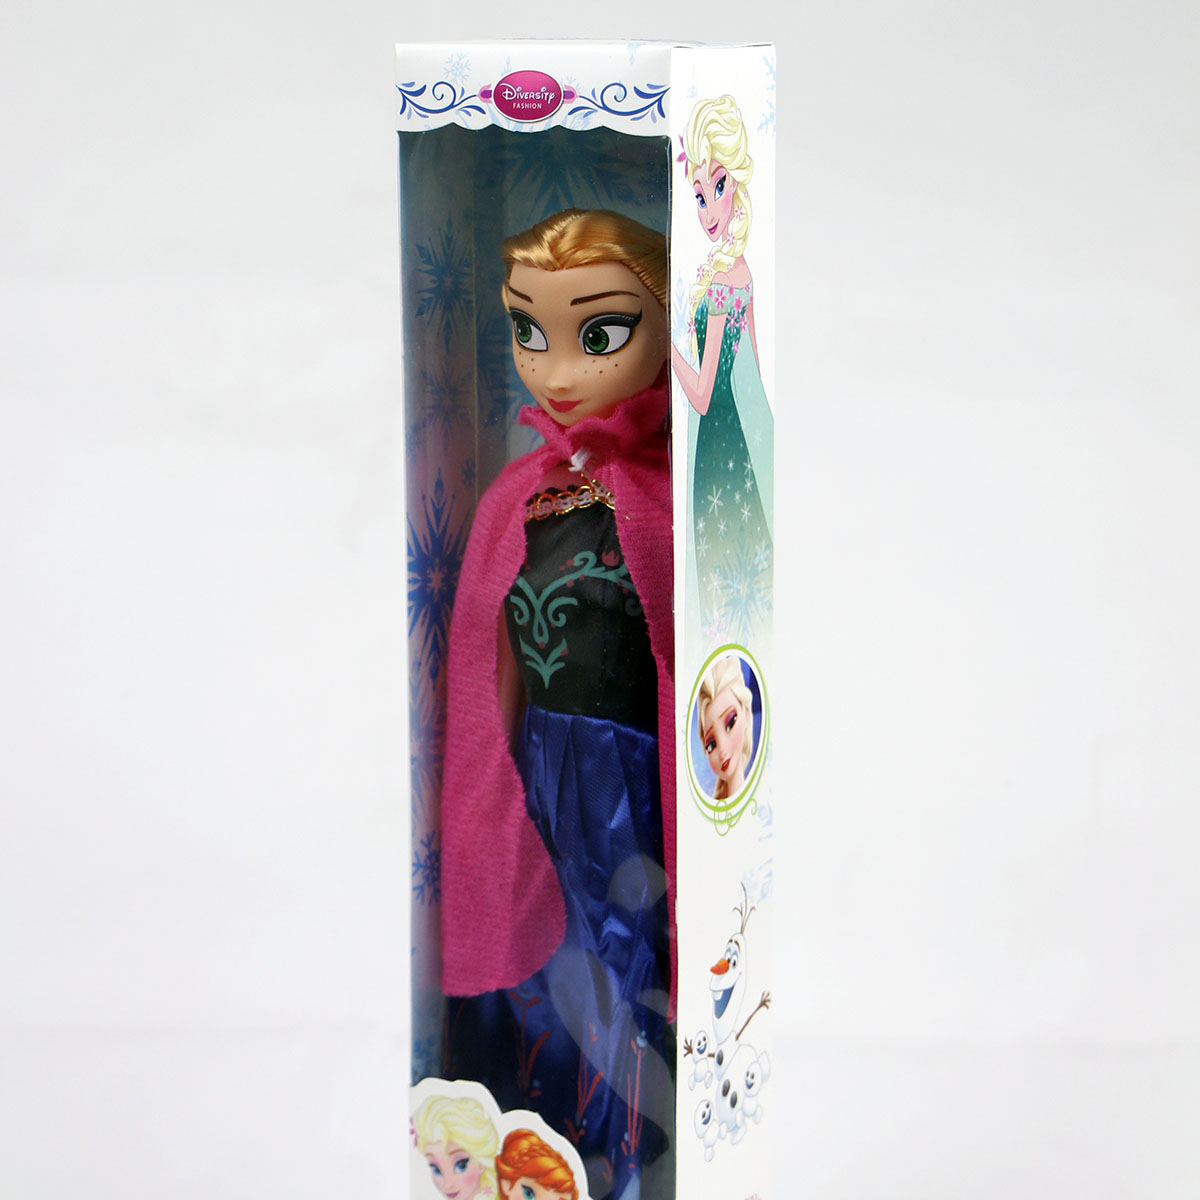 Frozen Anna & Elsa Girls Play Dolls เล่นตุ๊กตา เซนติเมตรวันเกิดเจ้าหญิงแช่แข็งตุ๊กตาของขวัญยัดไส้ Pelucia เอลซาและแอนนาน่ารักยัดไส้ของเล่นร้อนคริสต์มาส giftn